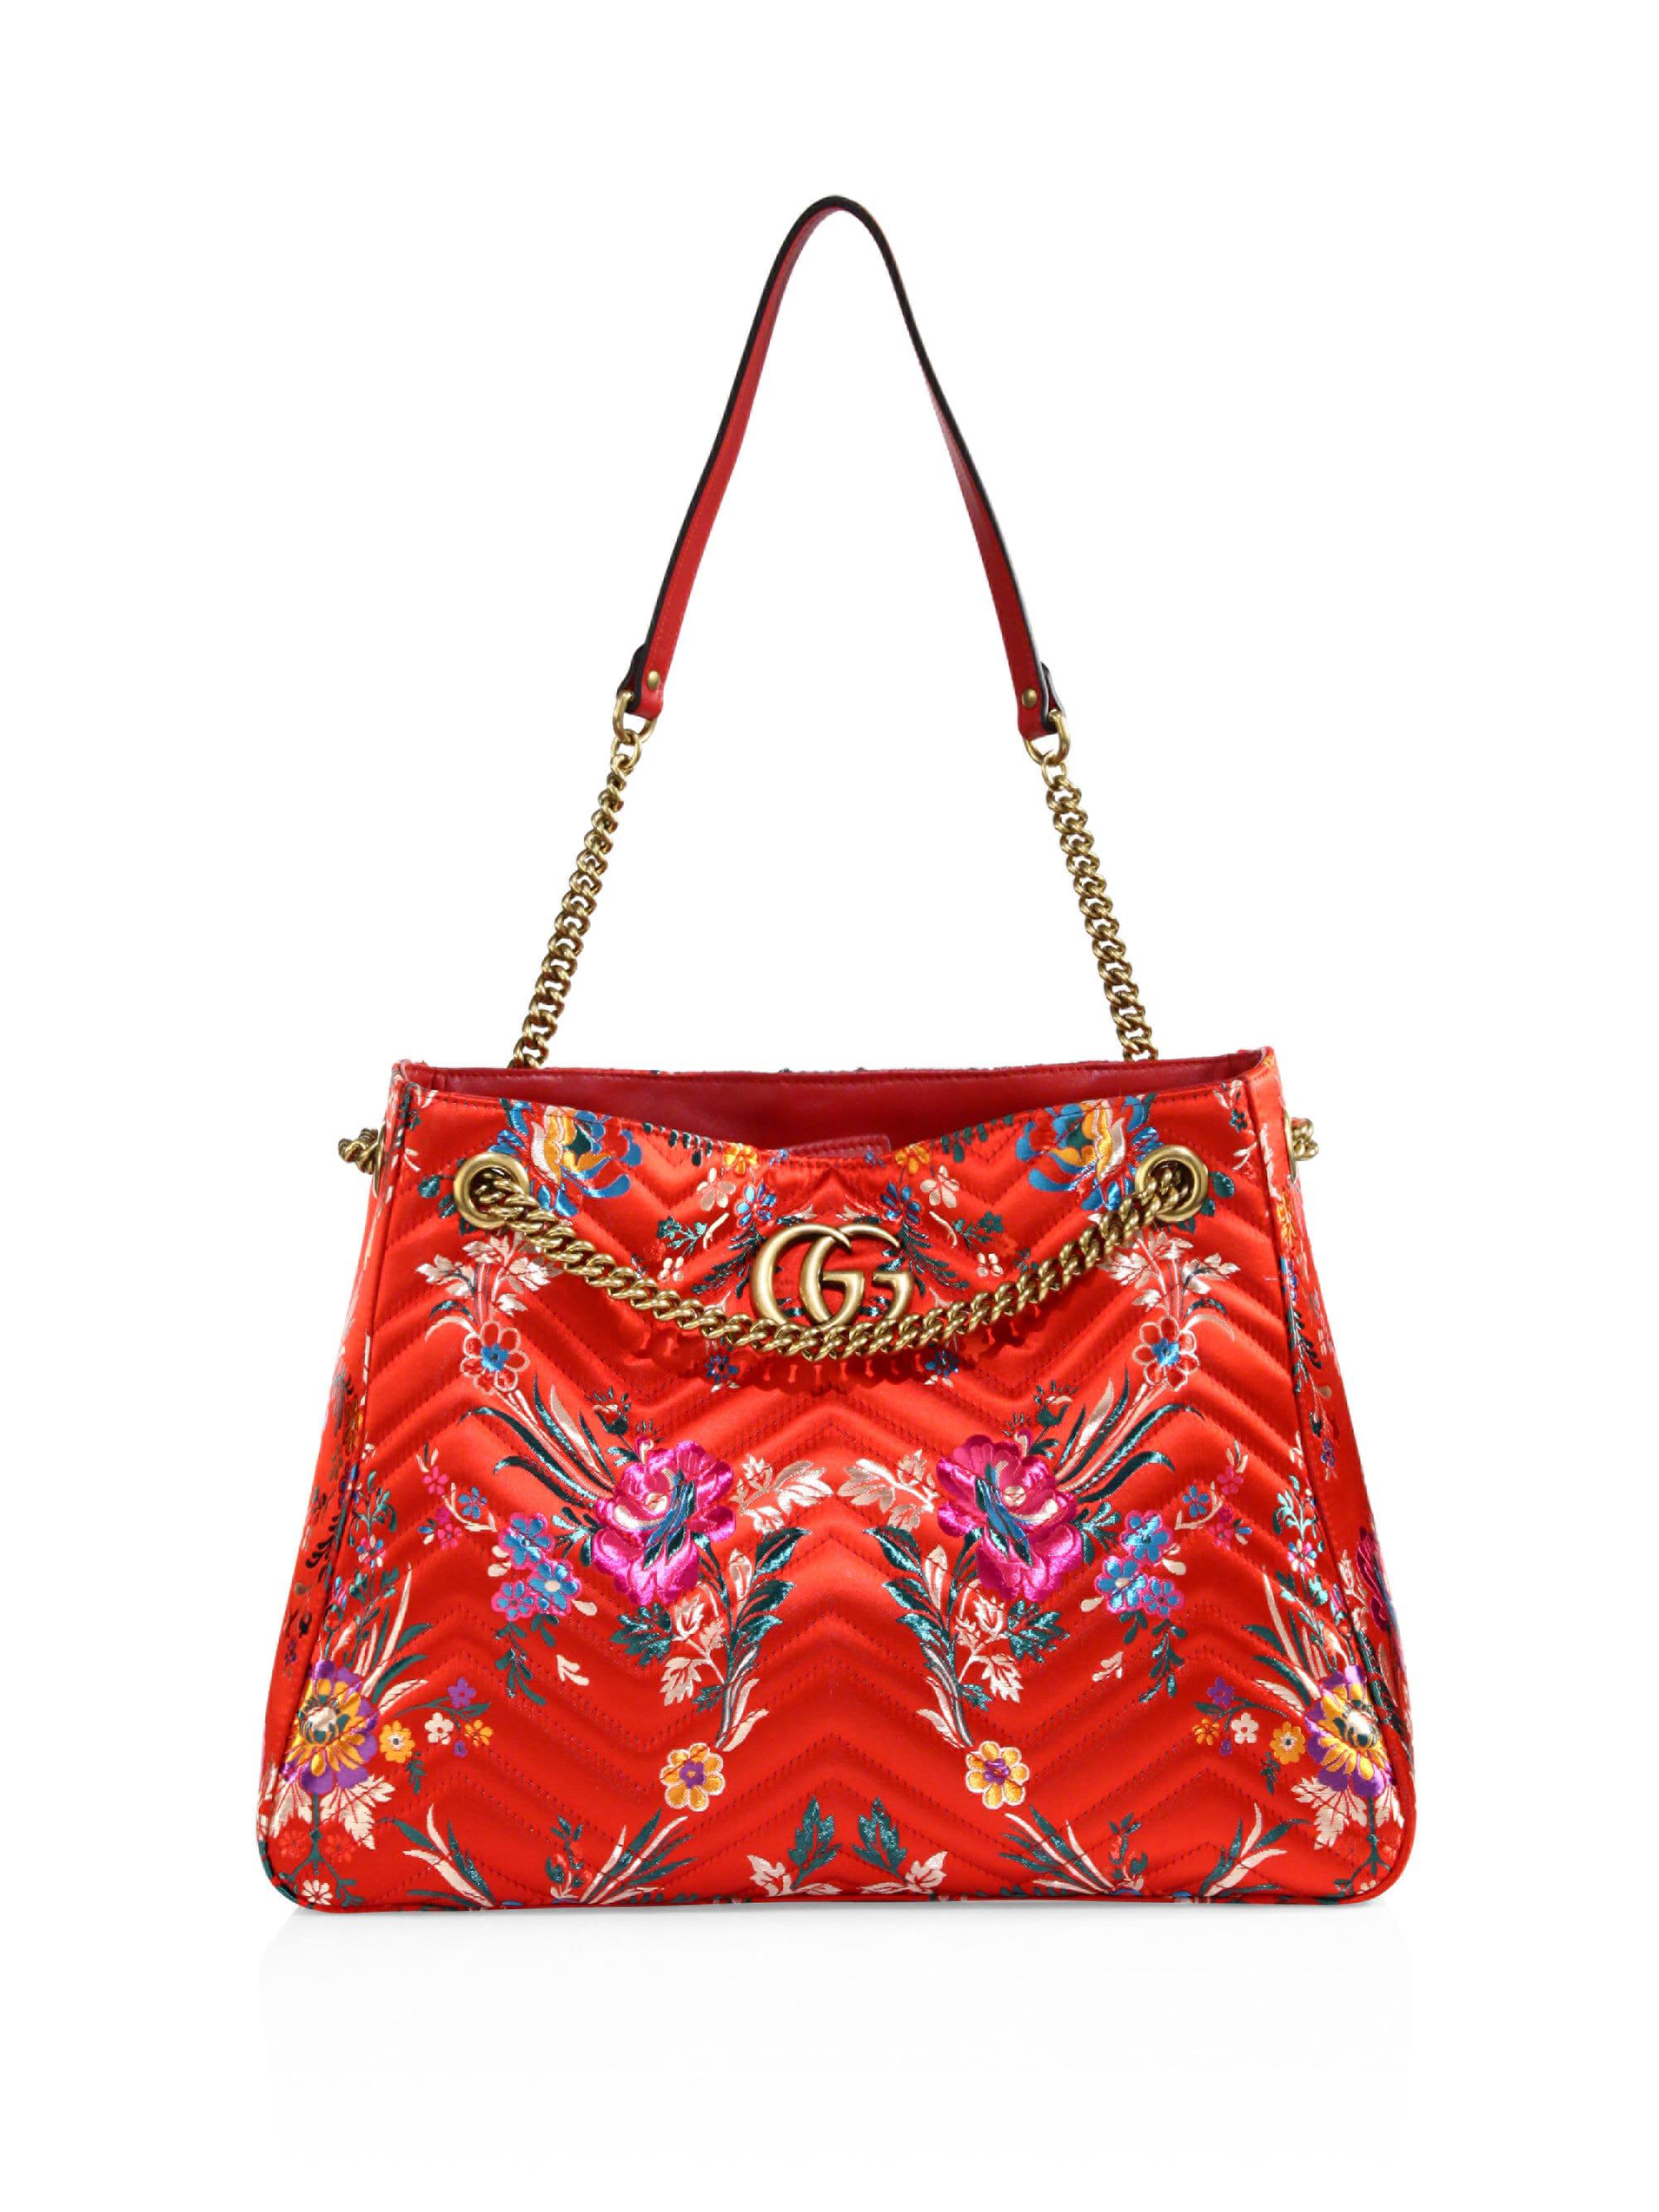 Gucci Medium GG Marmont Matelassé Floral Jacquard Chain Shoulder Bag in Red - Lyst